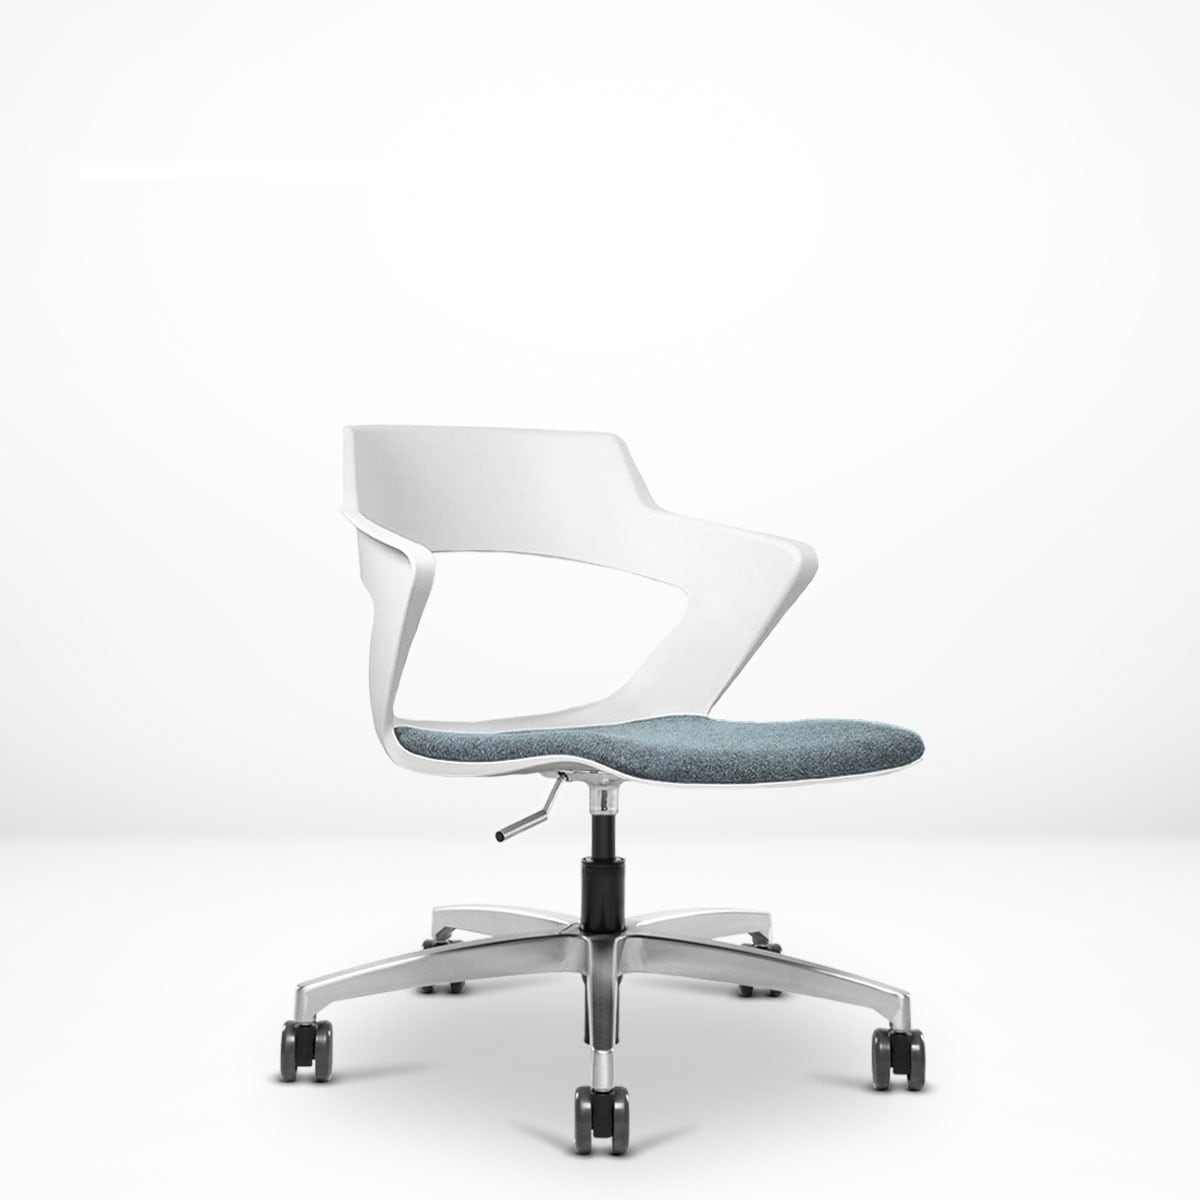 zee modern swivel chair for home office wool seat cushion aluminum base